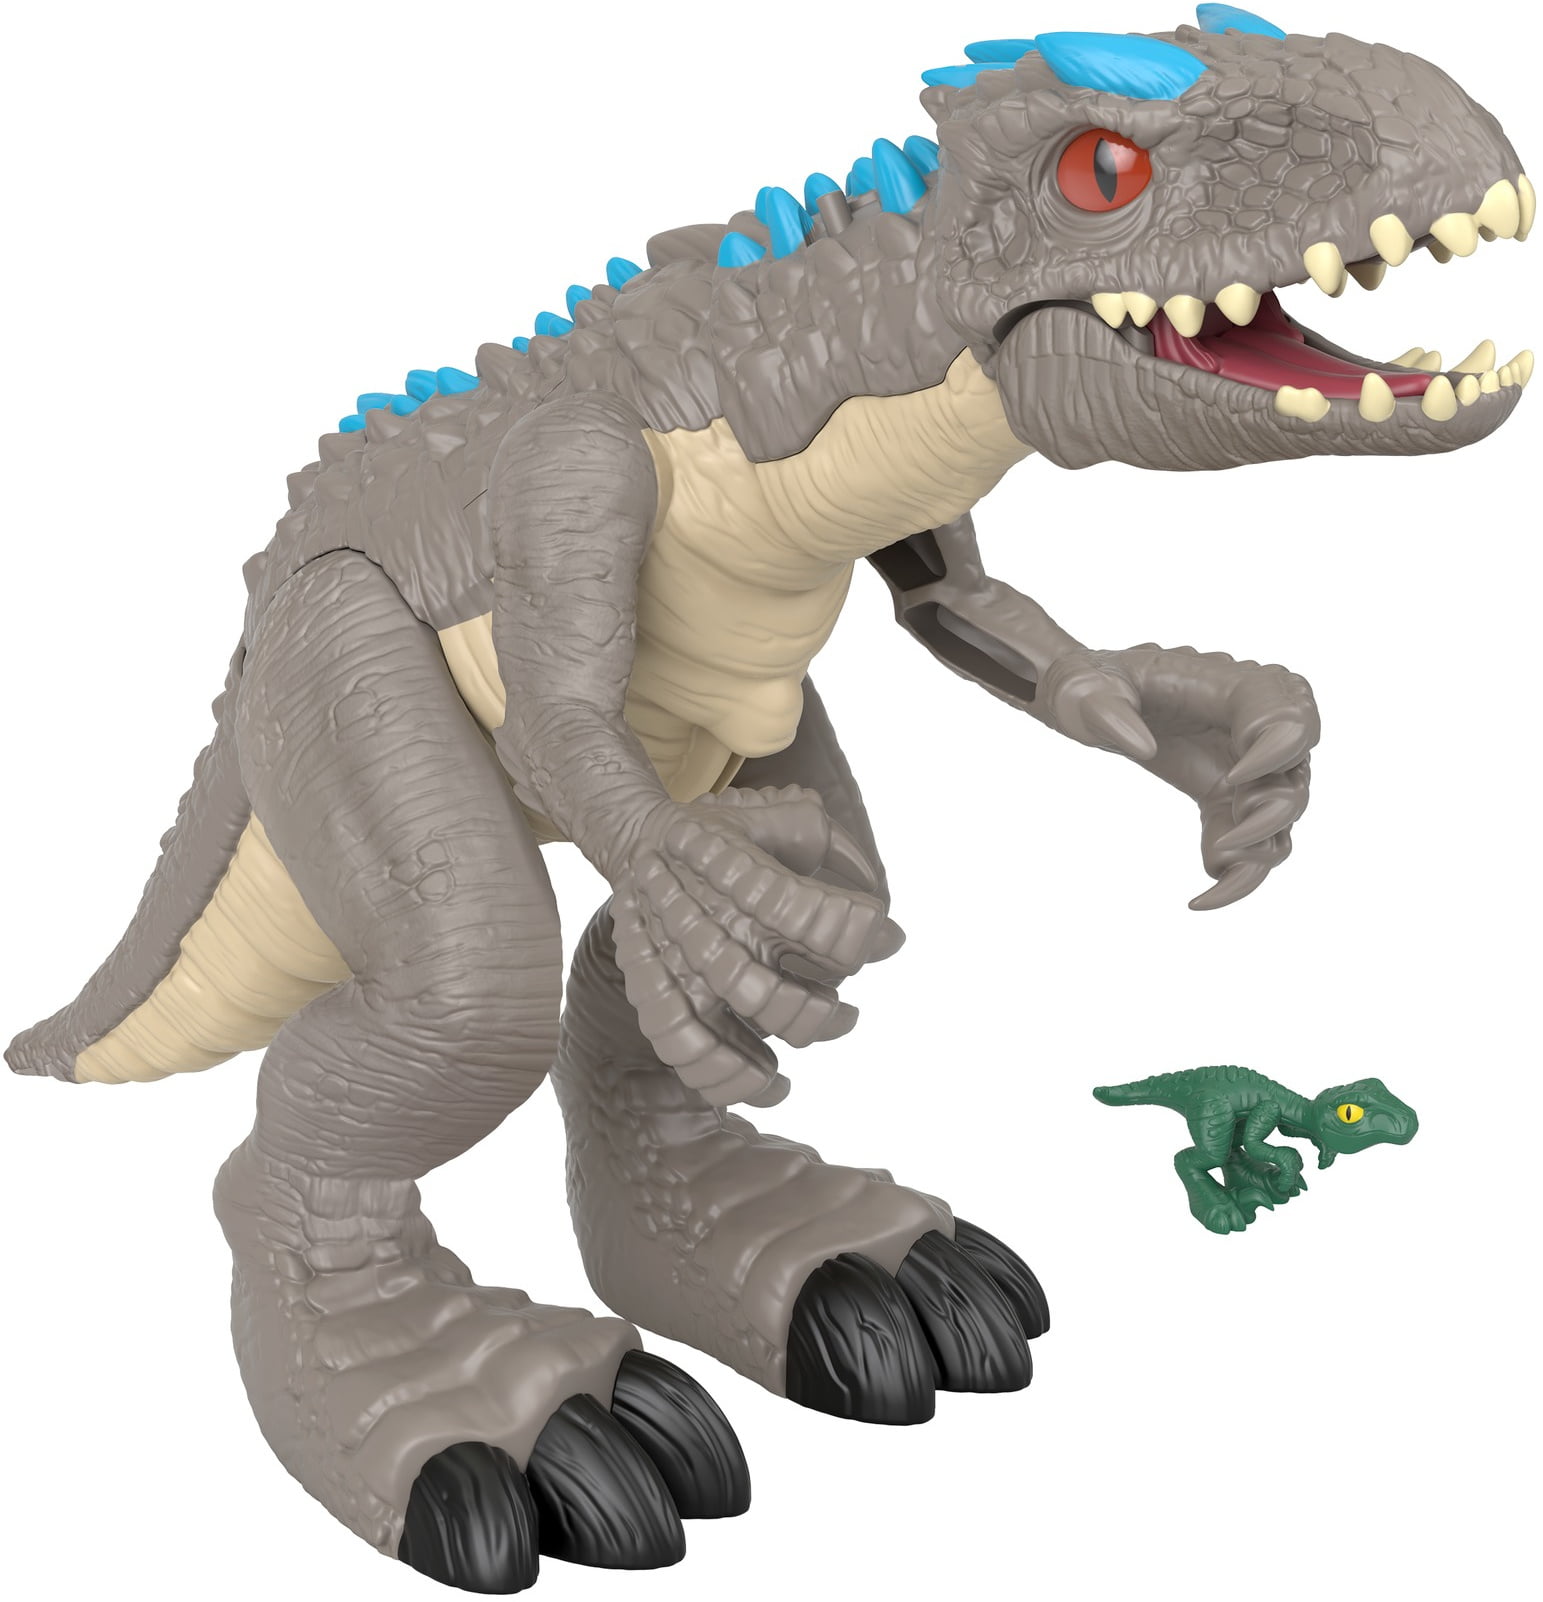 Details about   New Fisher Price Imaginext Jurassic Park World Dinosaur “Dilophosaurus” w/ Agent 